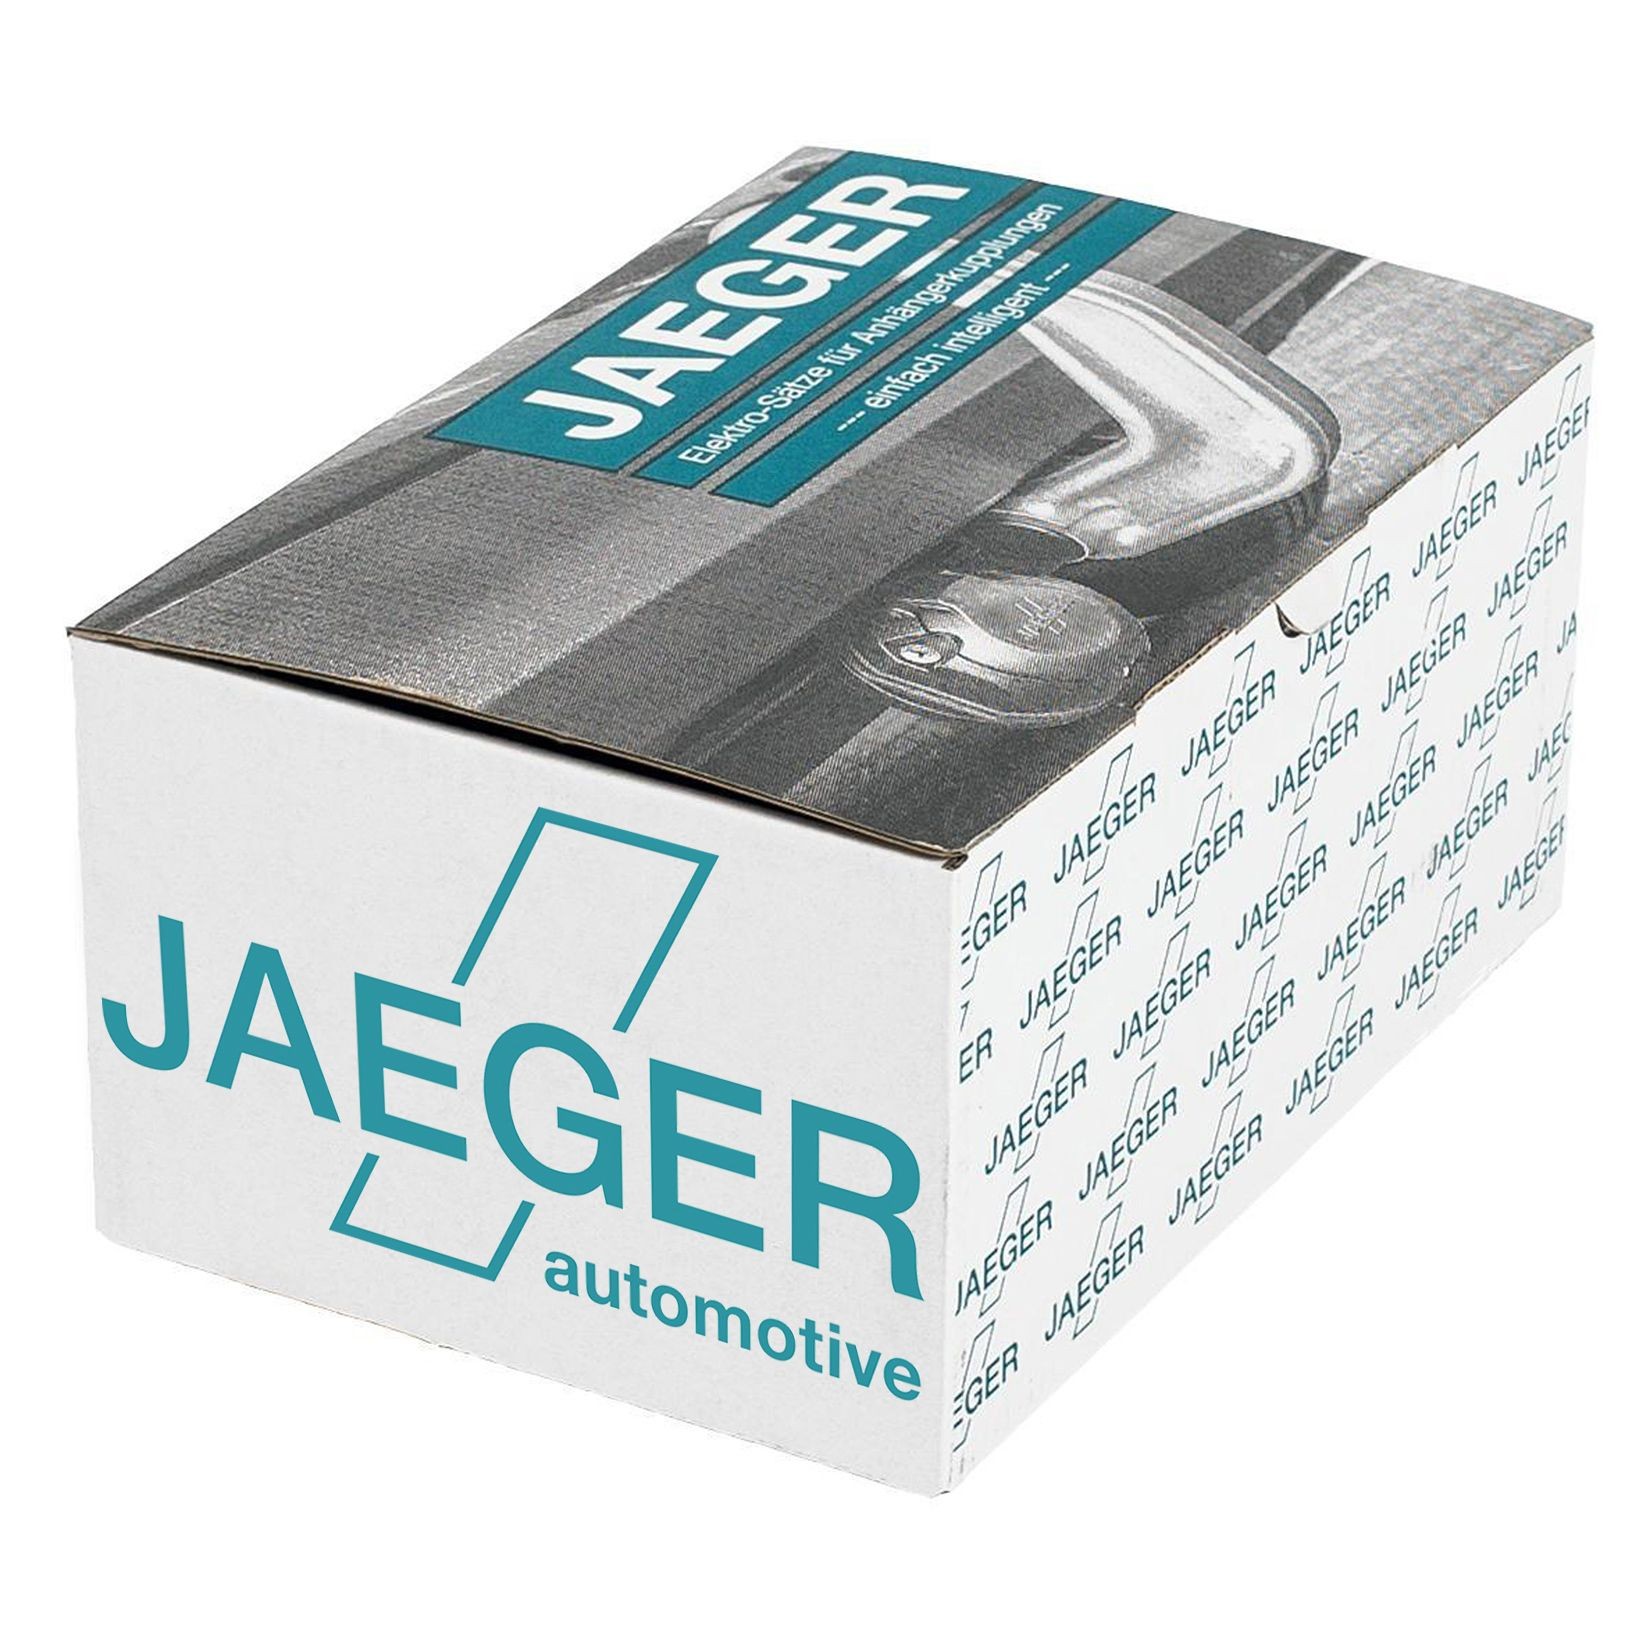 Peugeot BOXER Towbar electric kit JAEGER 22500526 cheap